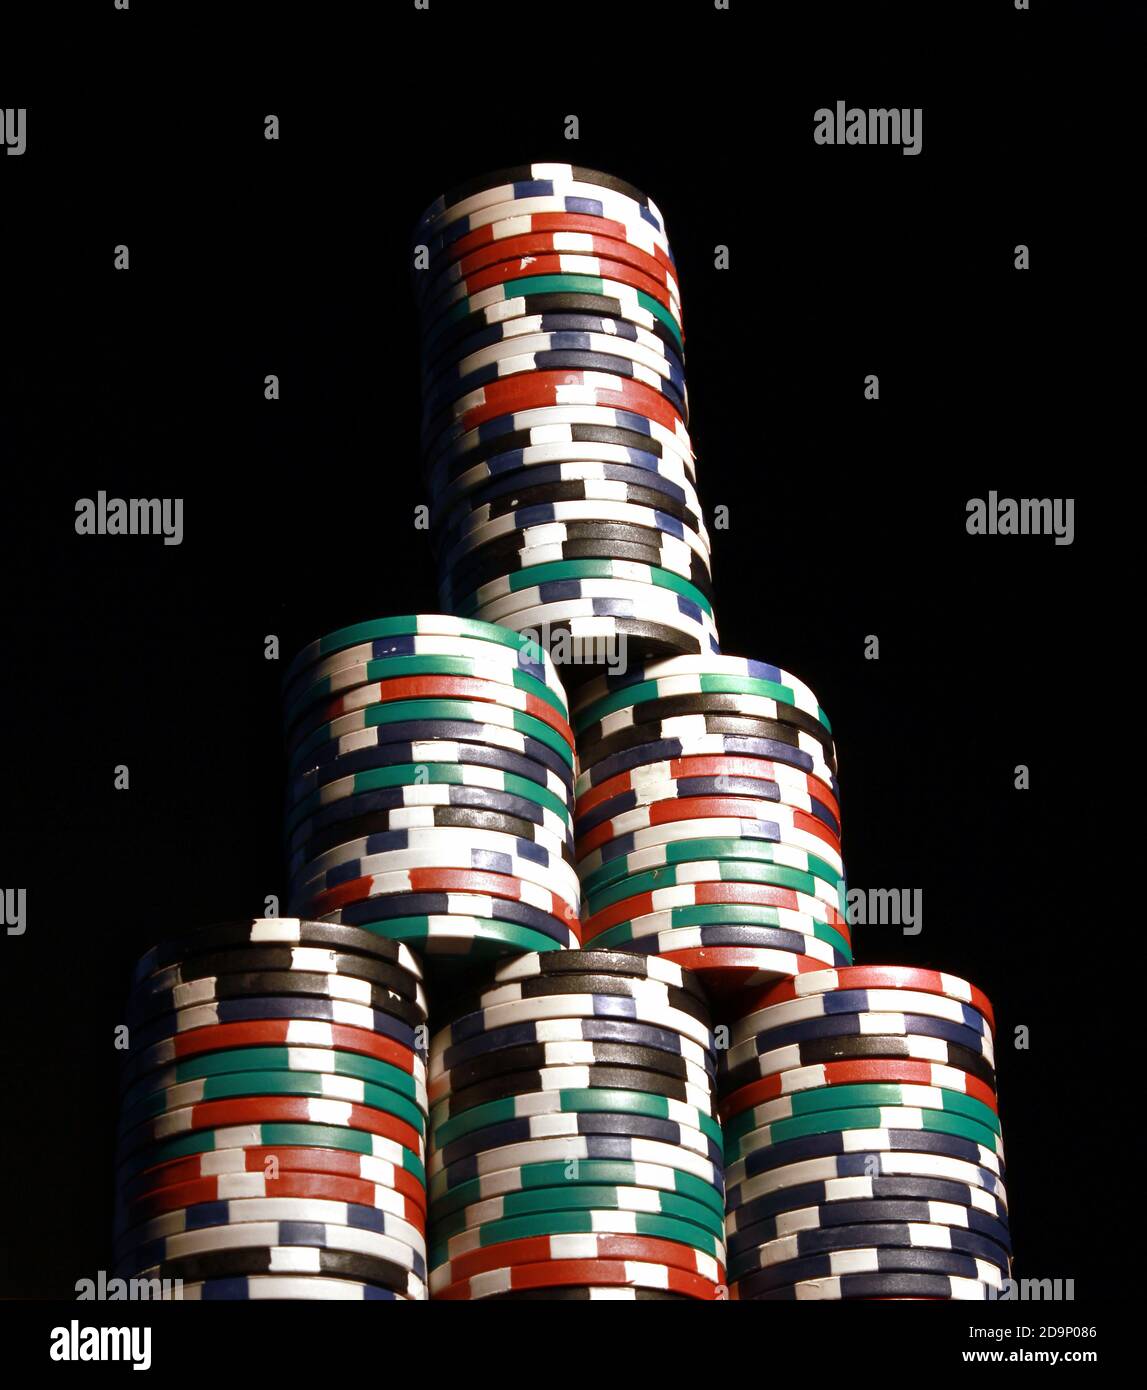 Eine vertikale Aufnahme eines Turms aus bunten Pokerchips Stockfoto